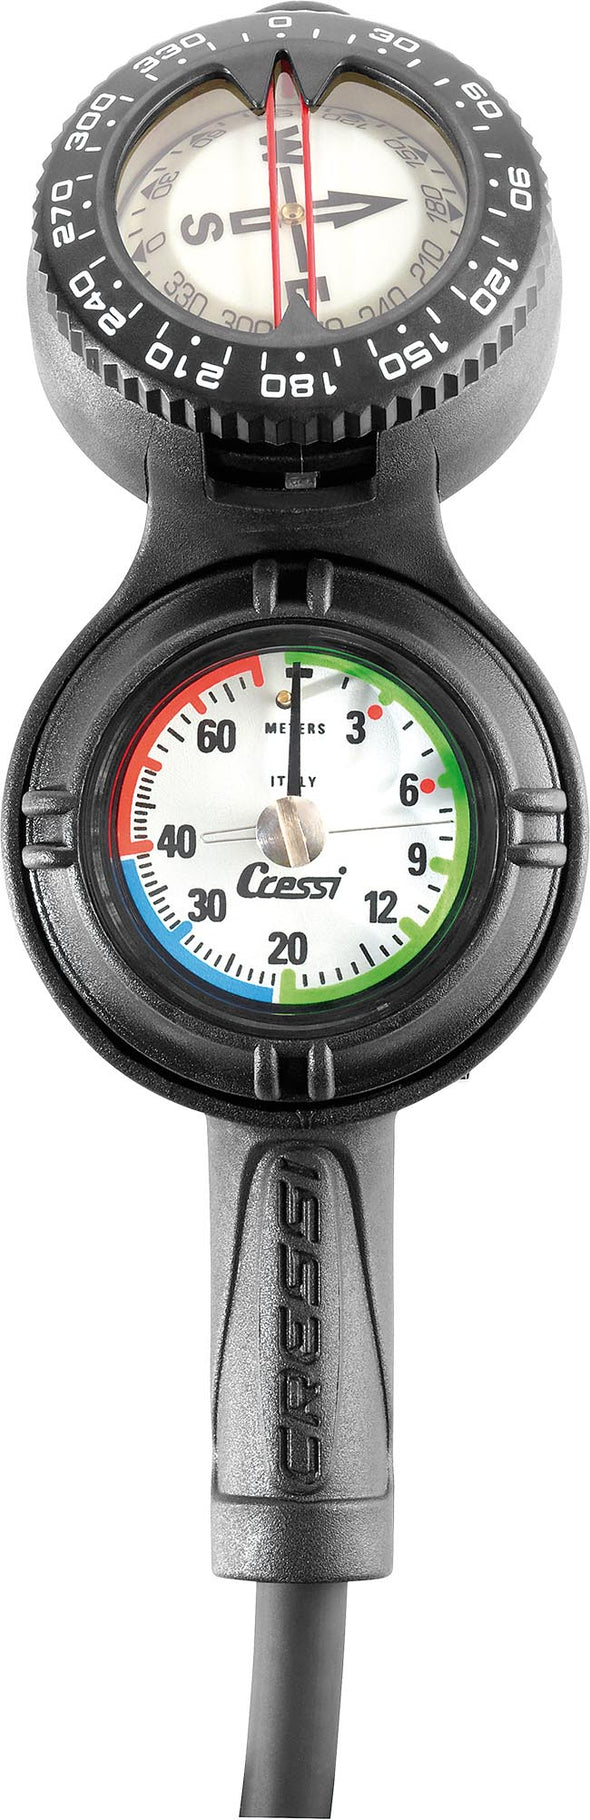 Console CPD3 Compass, Pressure & Depth Gauge